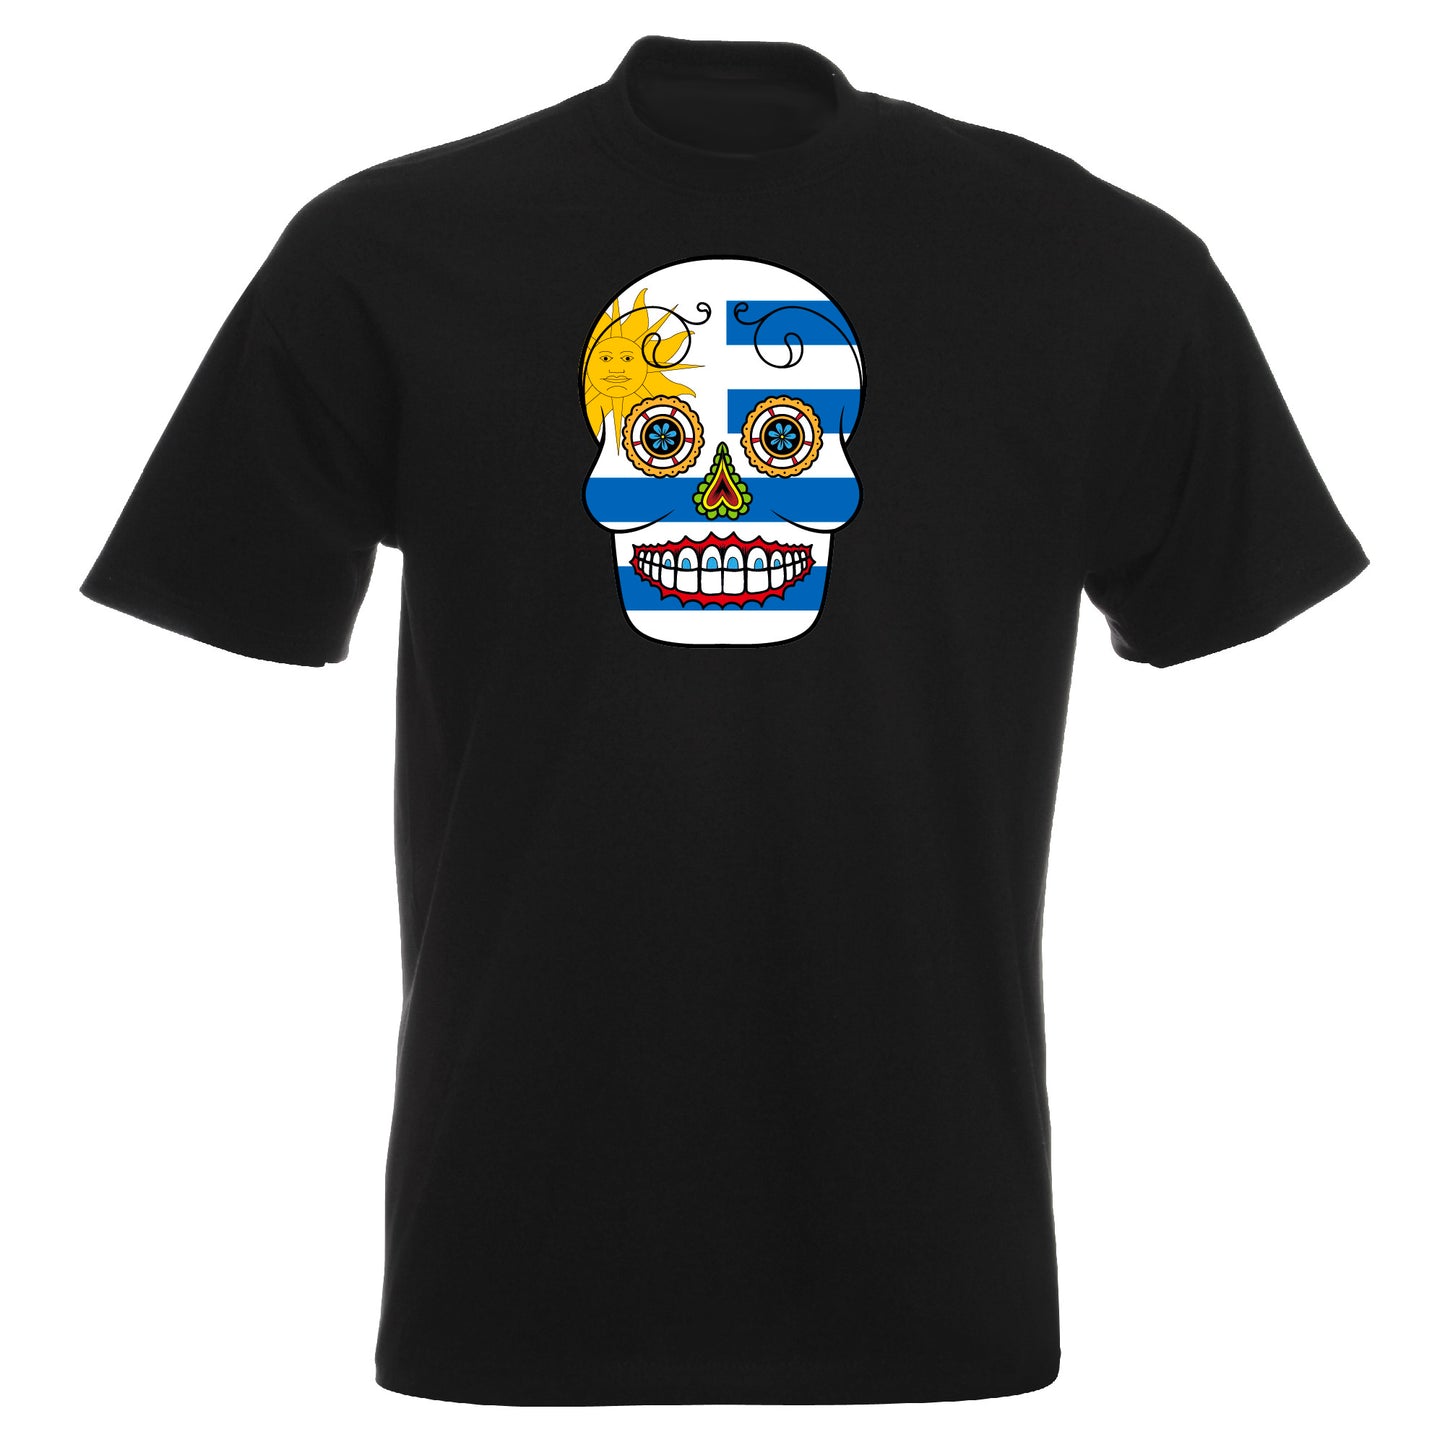 INDIGOS UG - T-Shirt Herren - Uruguay - Skull - Fussball